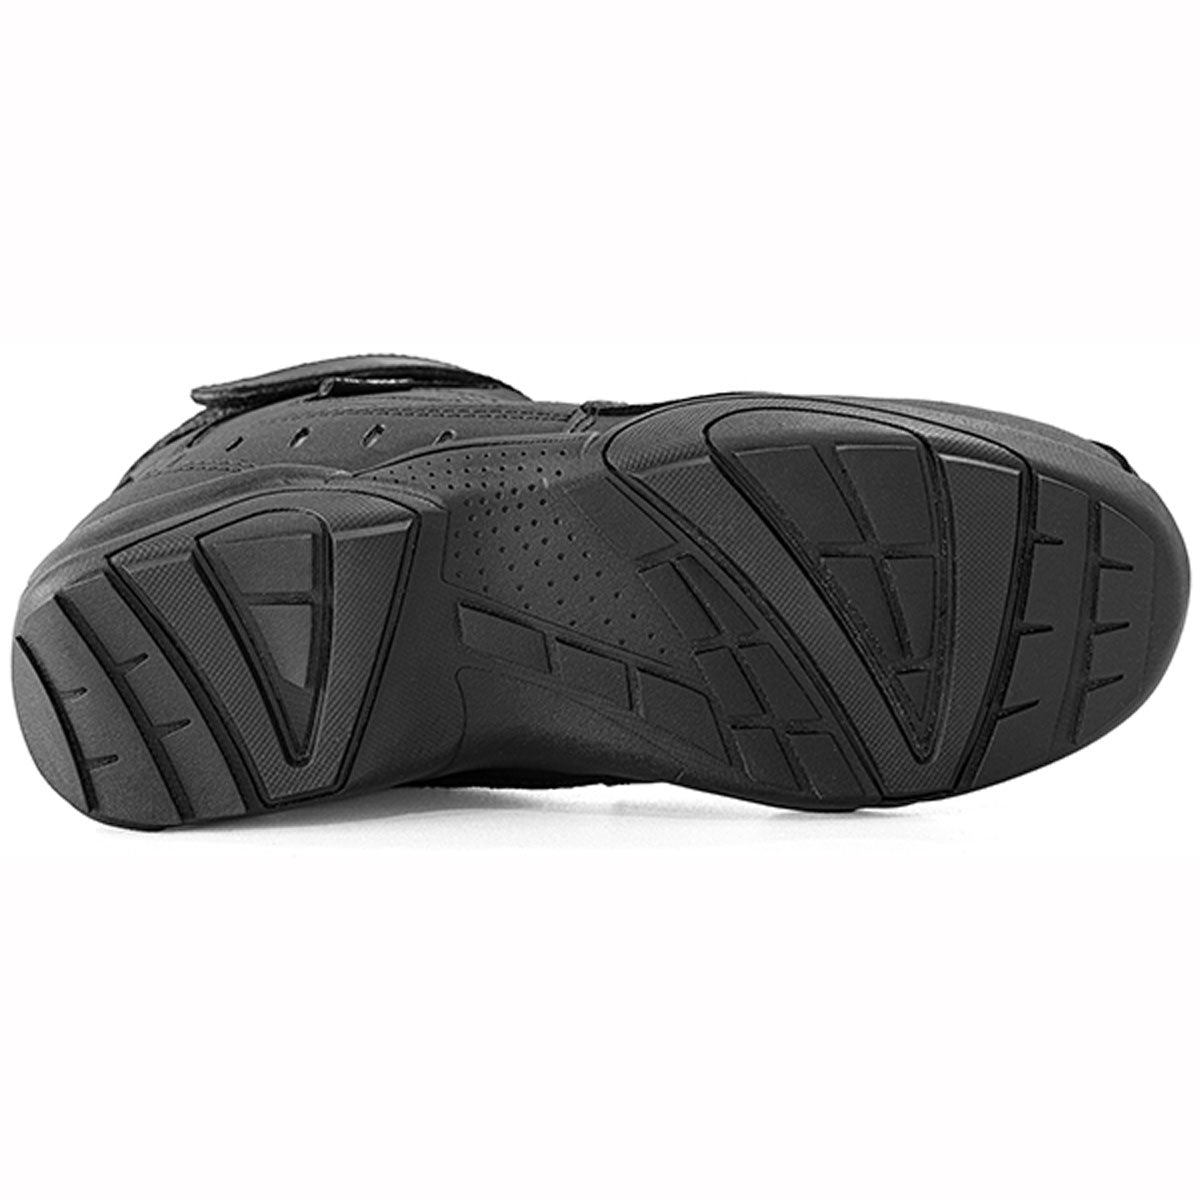 Richa Slick Motorbike Shoes - Black sole